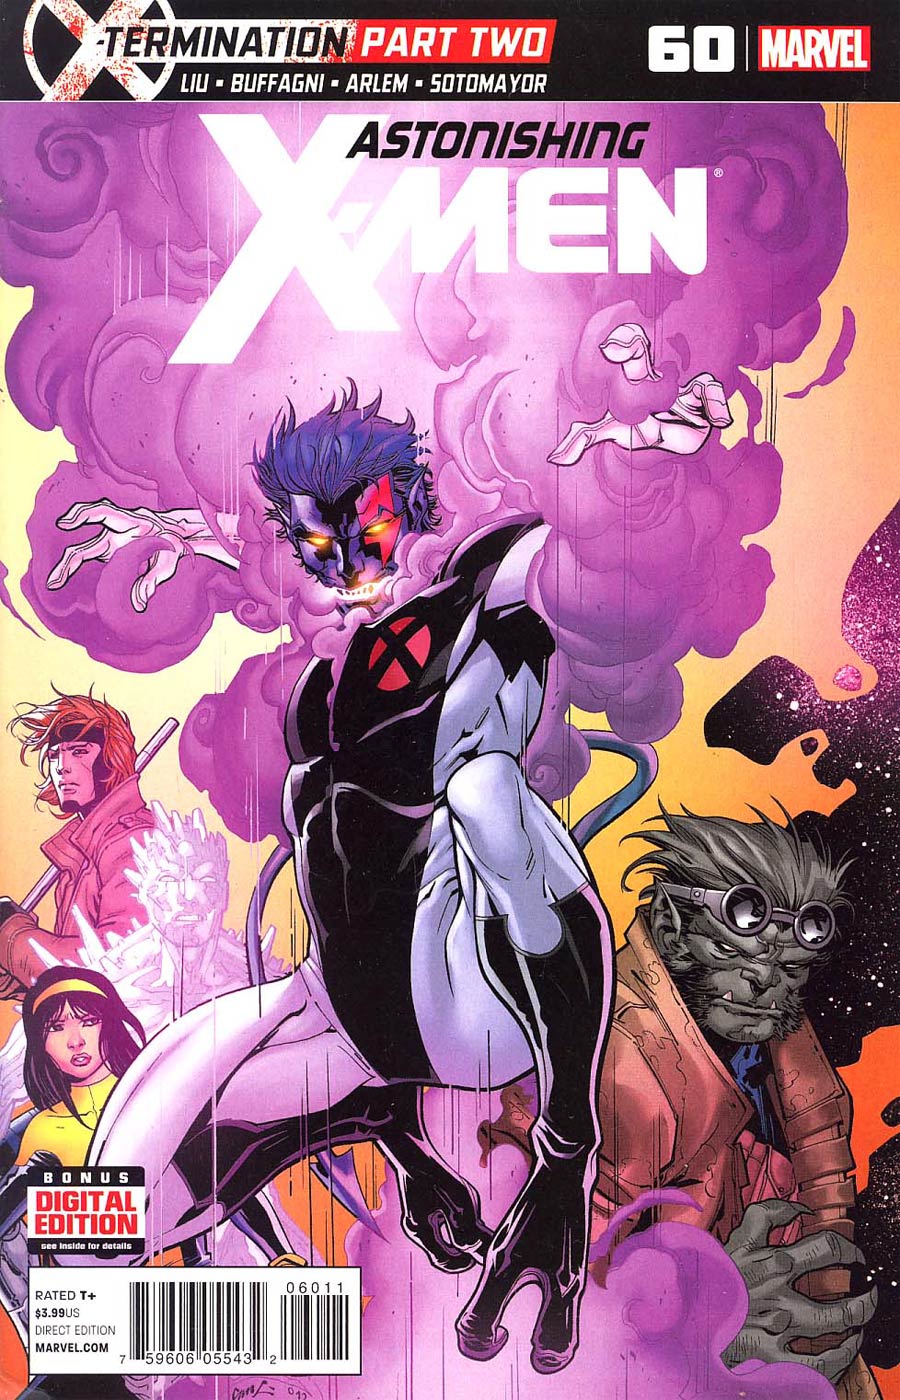 Astonishing X-Men Vol 3 #60 Cover A Regular Giuseppe Camuncoli Cover (X-Termination Part 2)